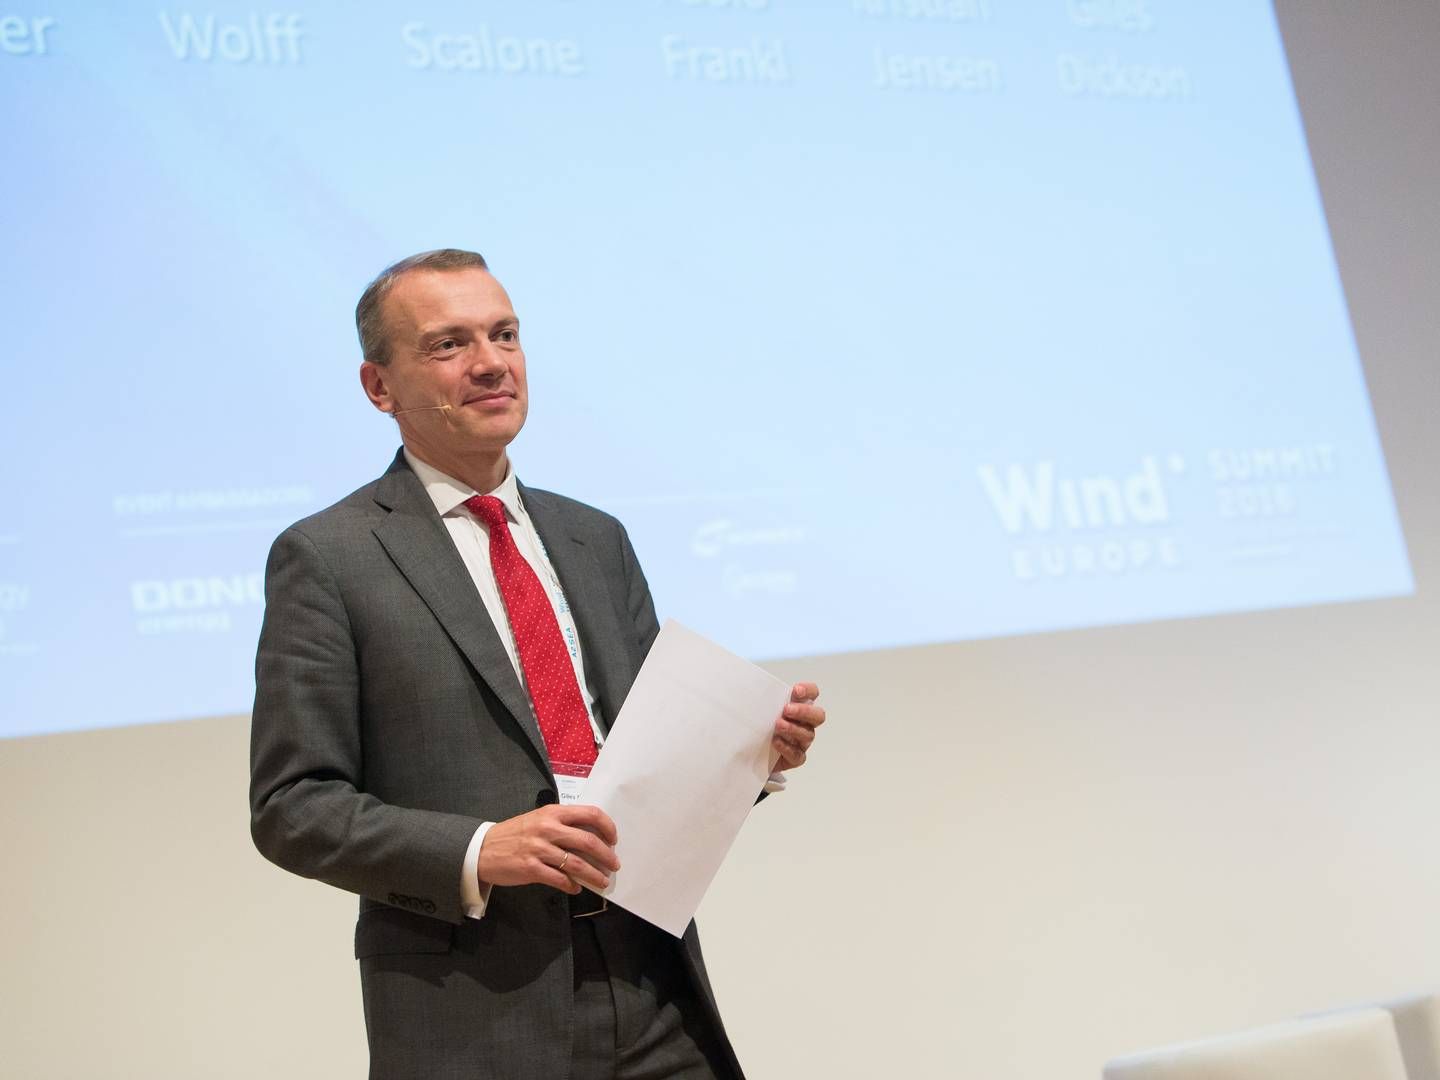 Adm. direktør for Wind Europe Giles Dickson. | Foto: Windeurope / Bickley